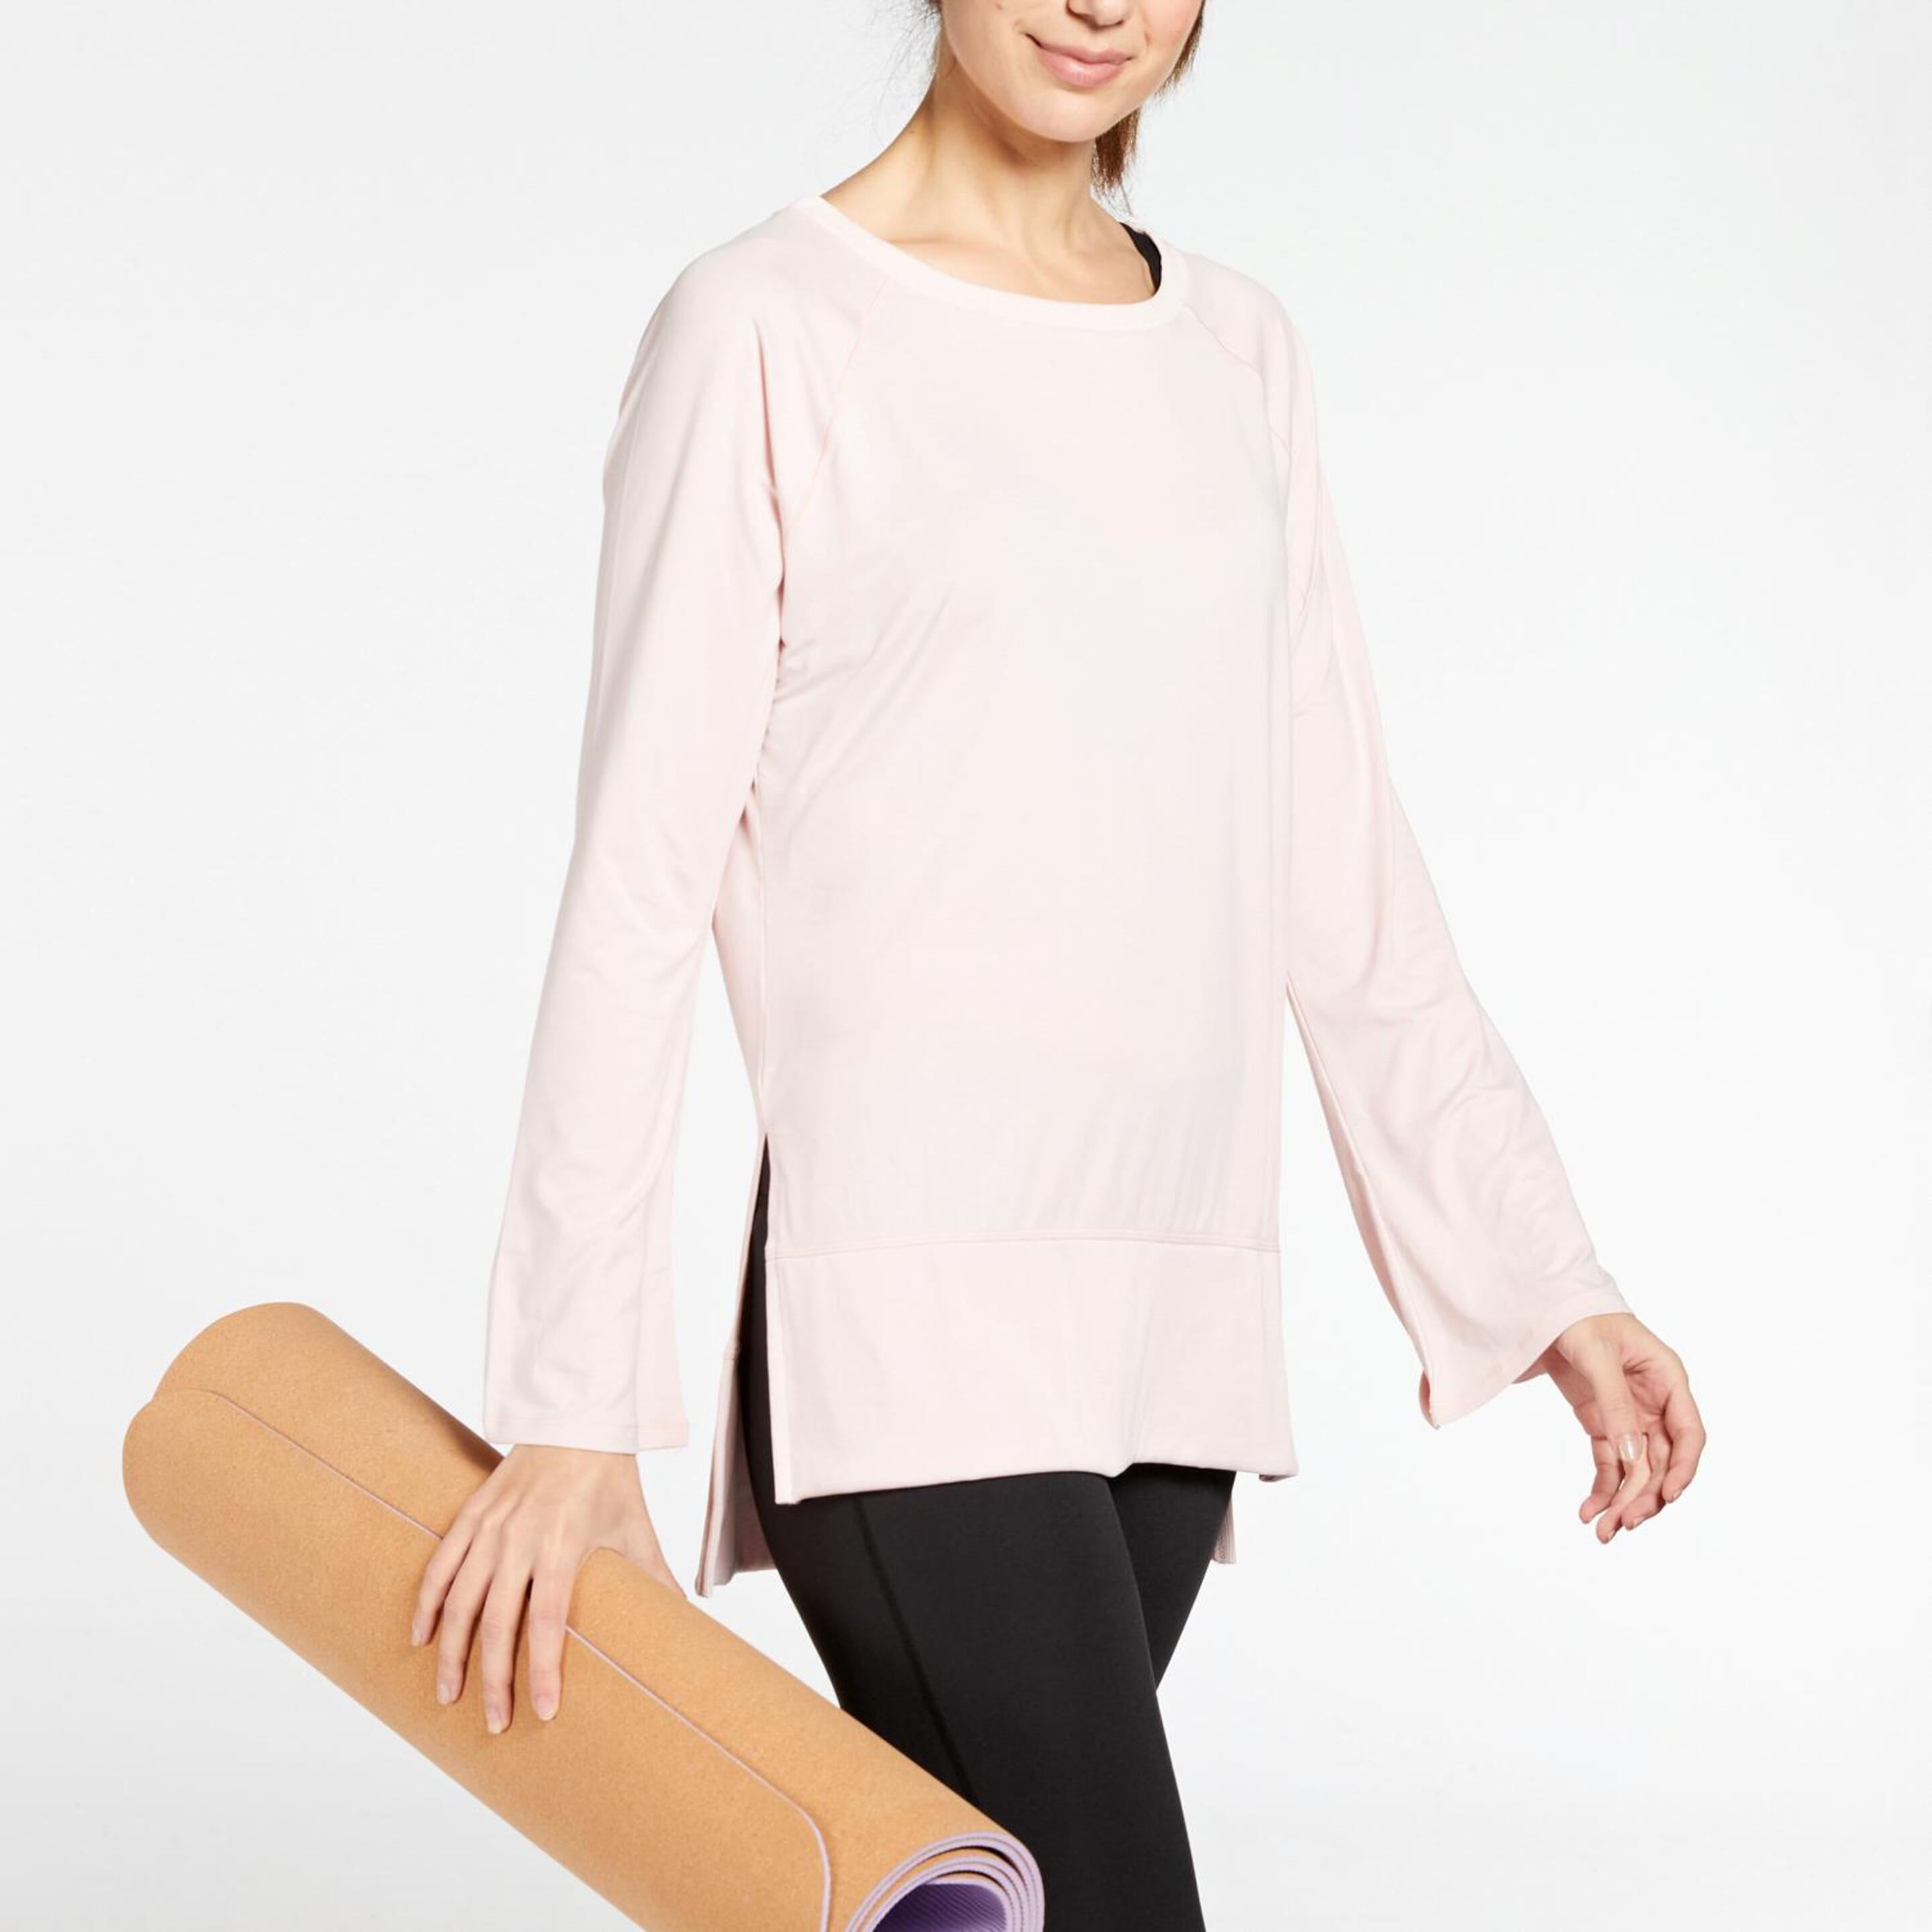 Puma Studio Yogini - Rosa - Camiseta Yoga Mujer